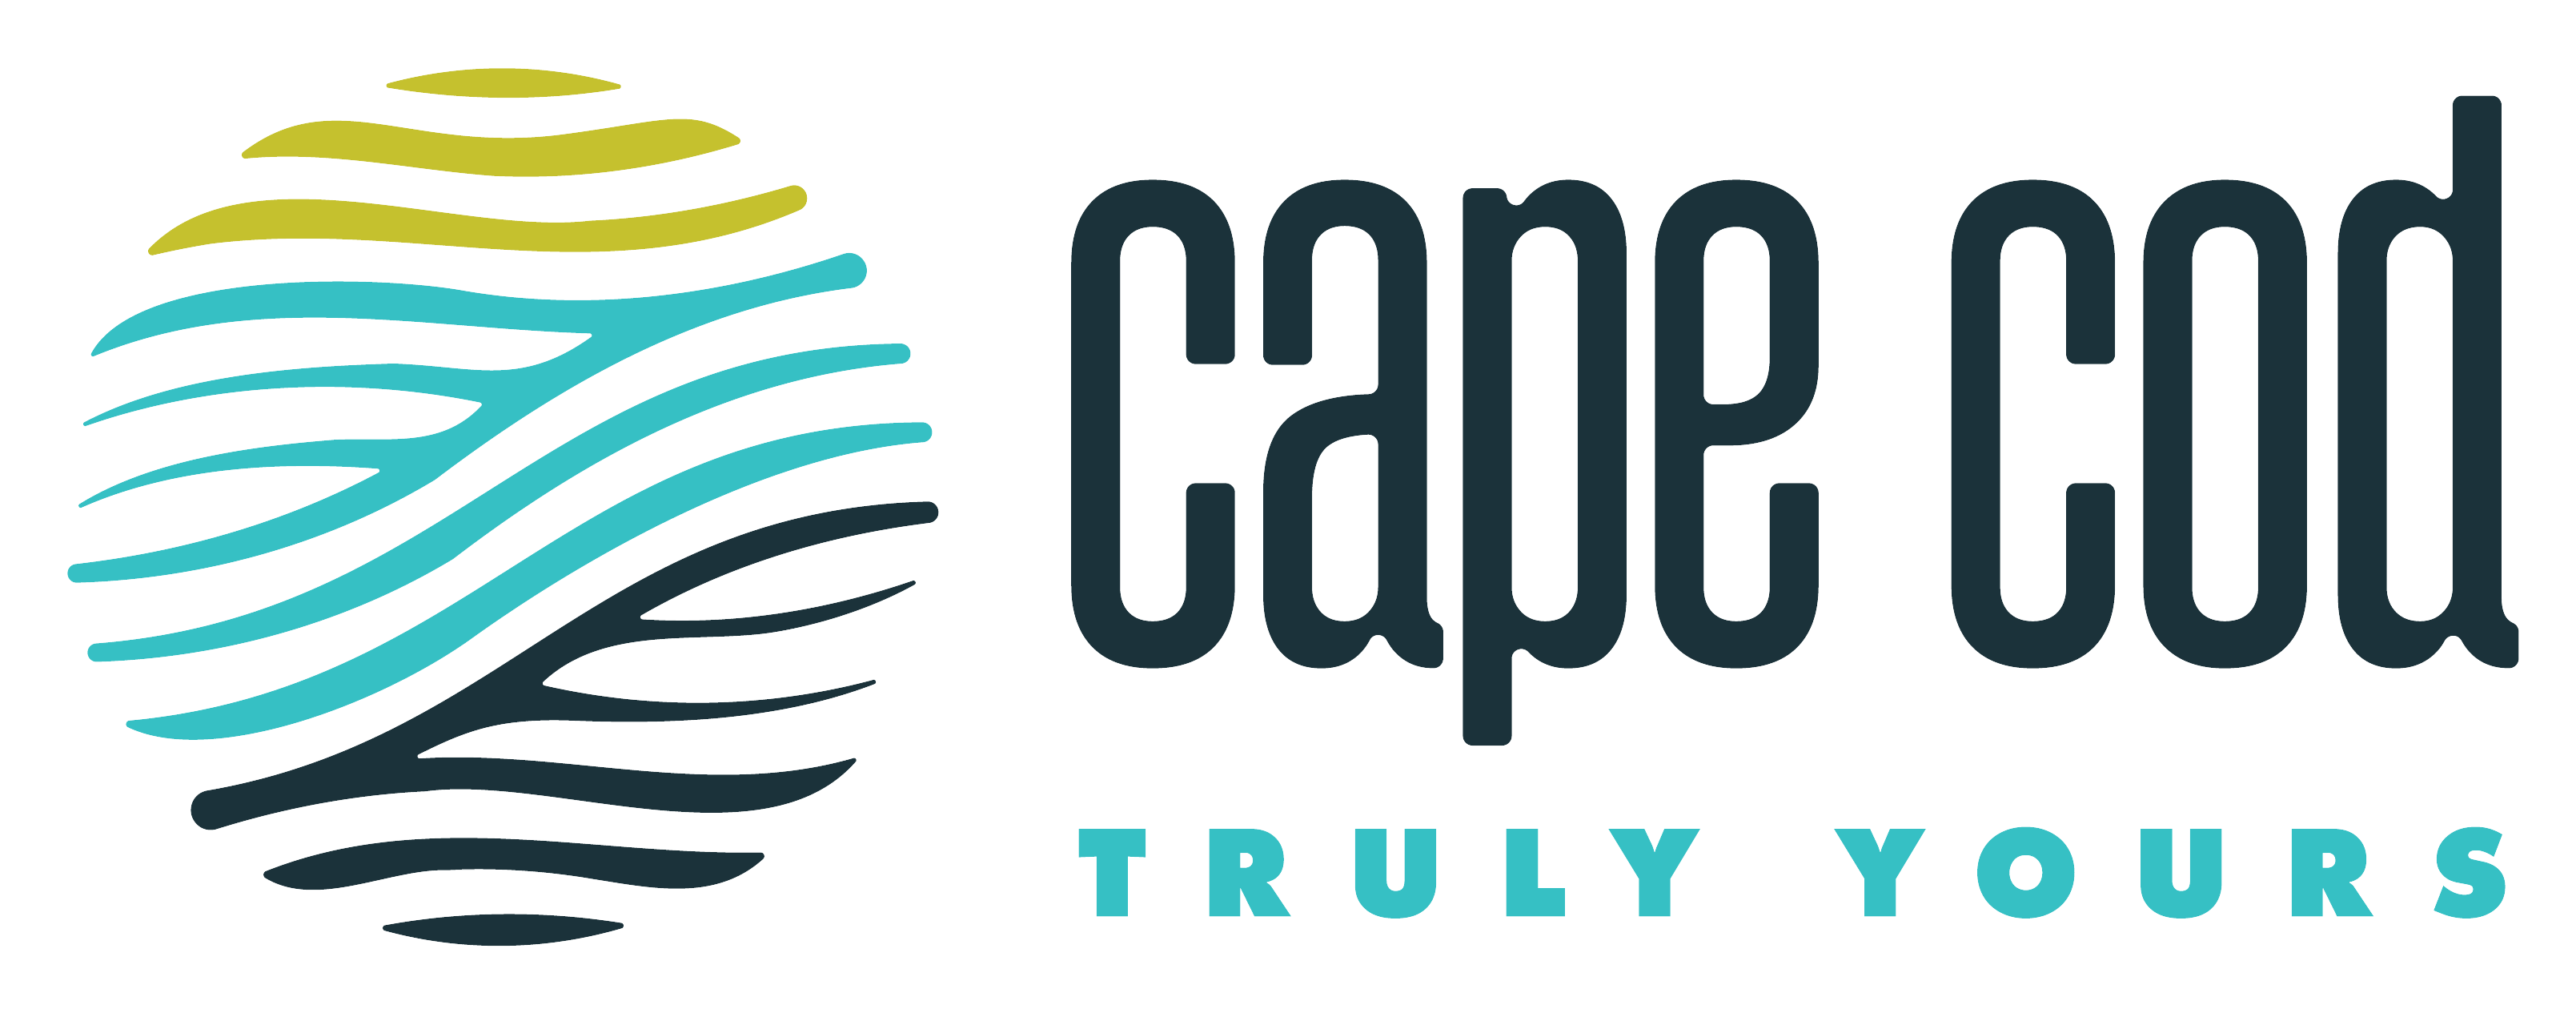 Cape Cod Chamber of Commerce Logo